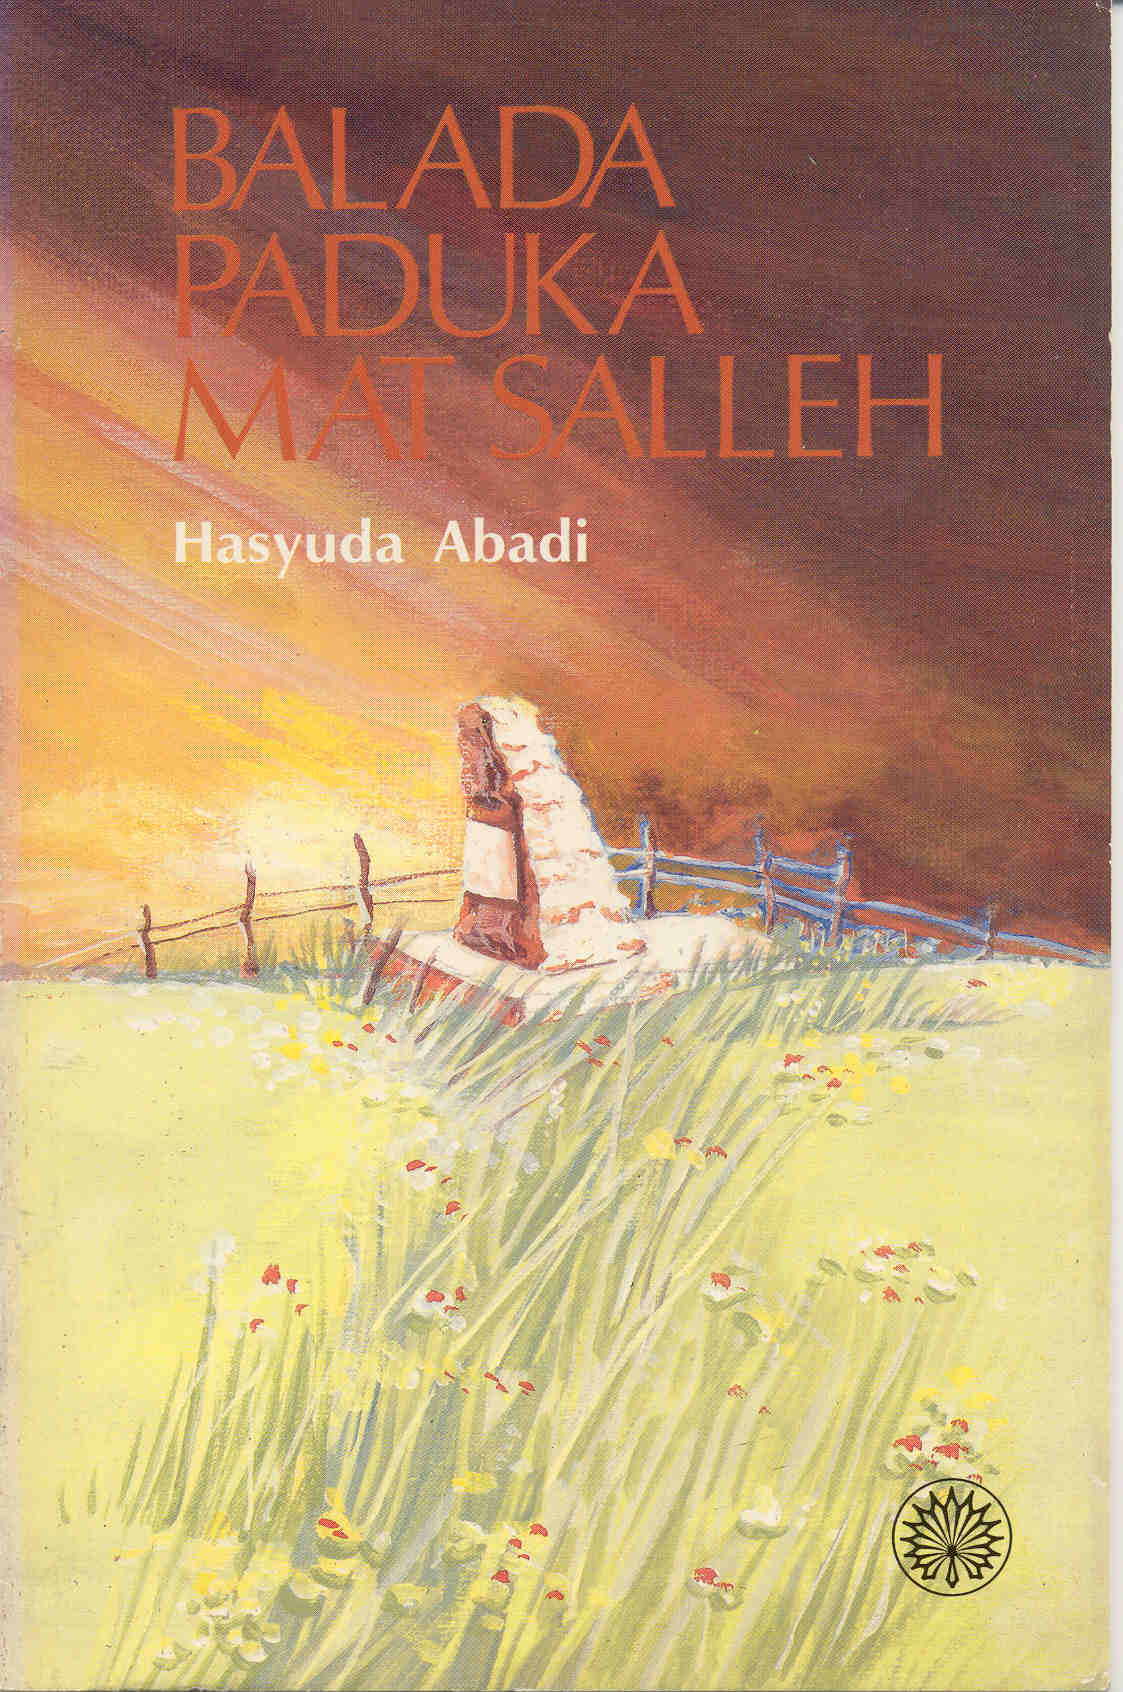 BALADA PADUKA MAT SALLEH DBP(1989)